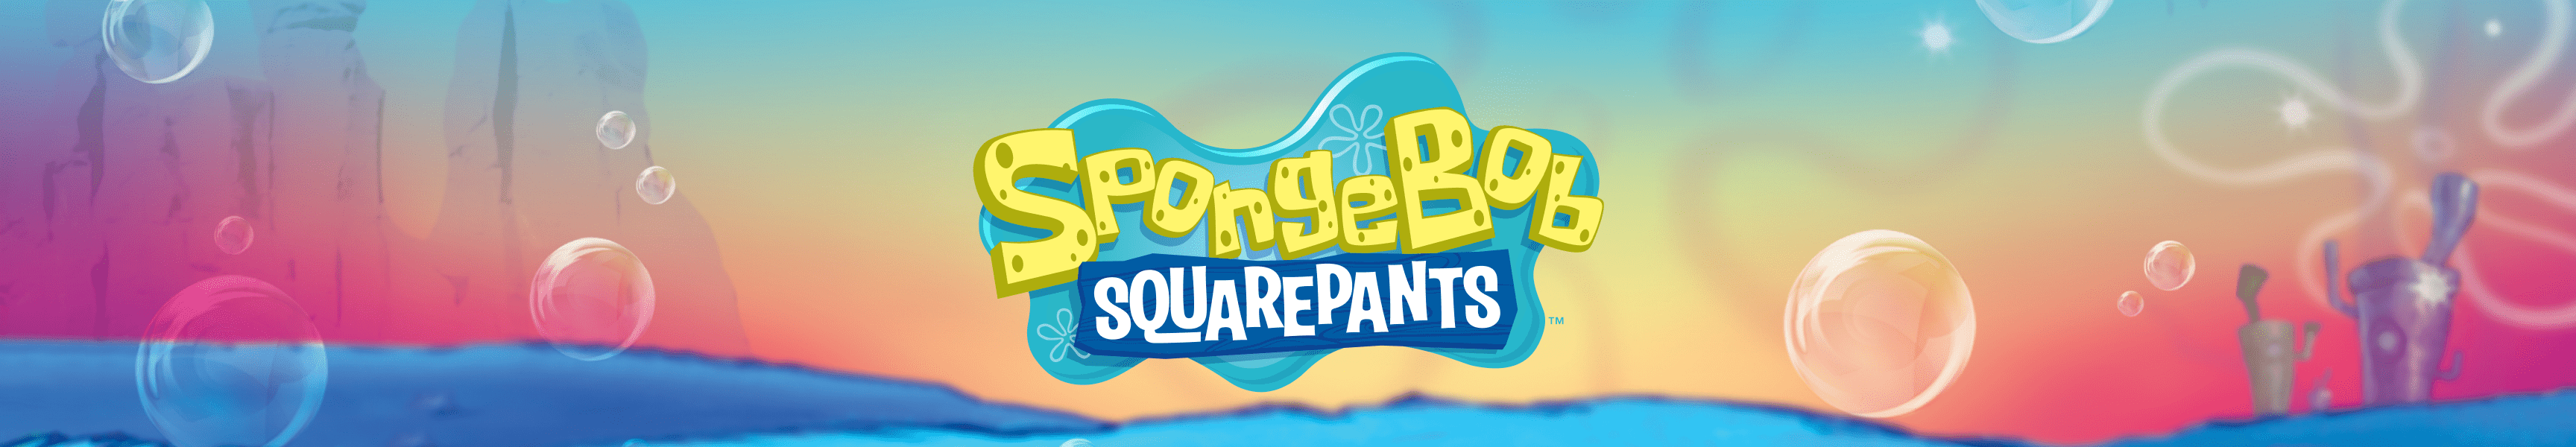 SpongeBob SquarePants x Britto